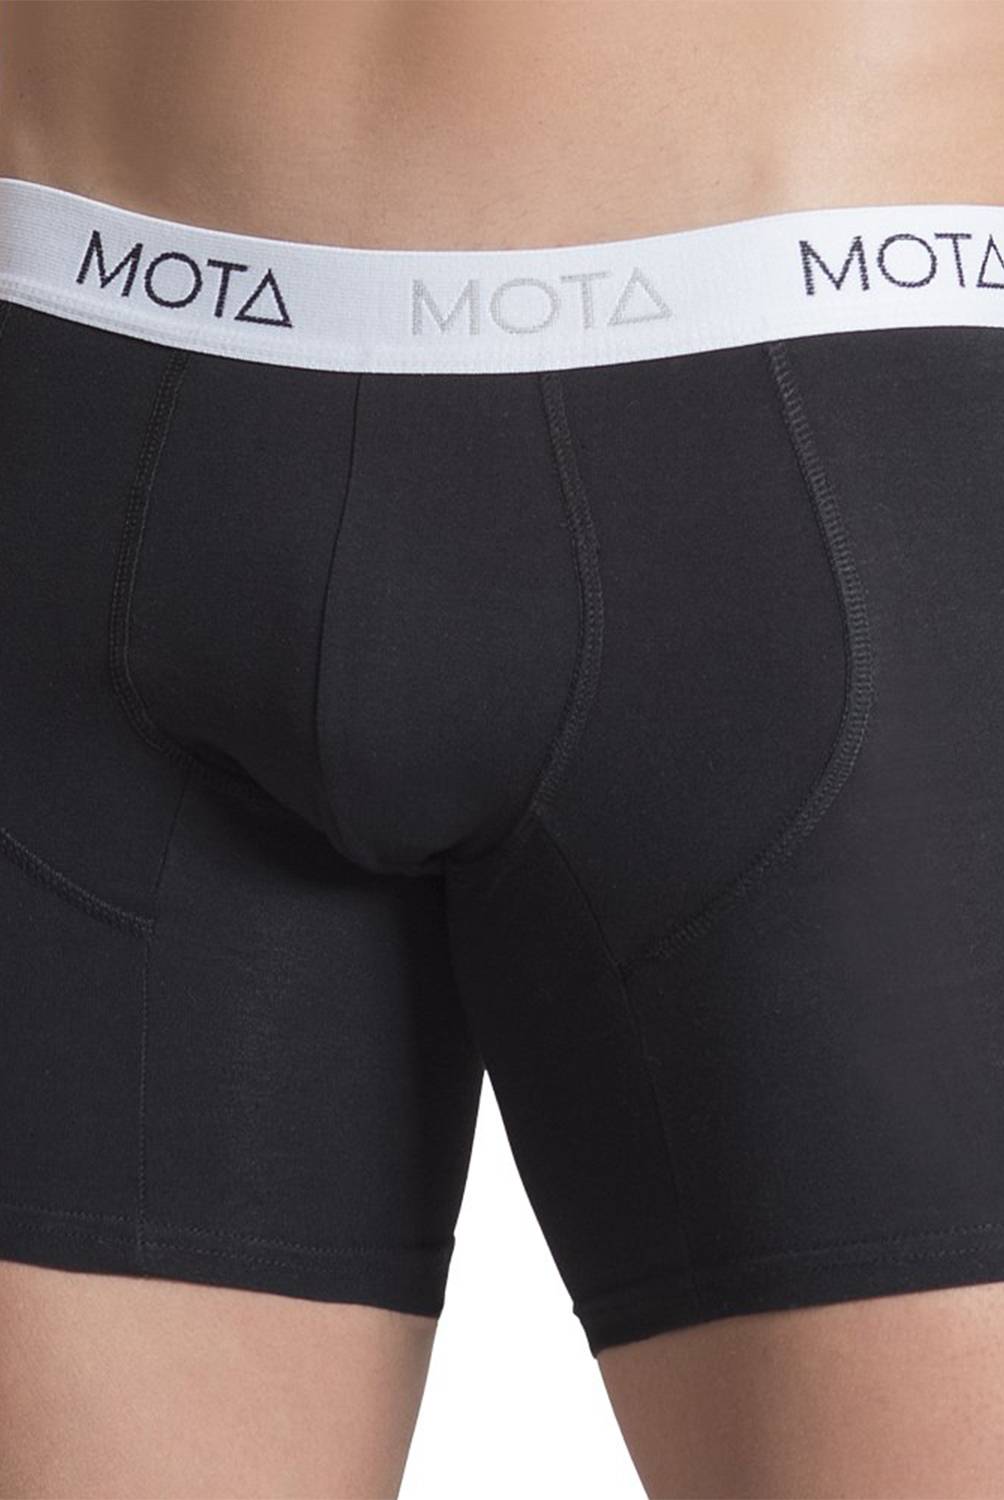 MOTA - Boxer Medio Algodón Mota Pack 3